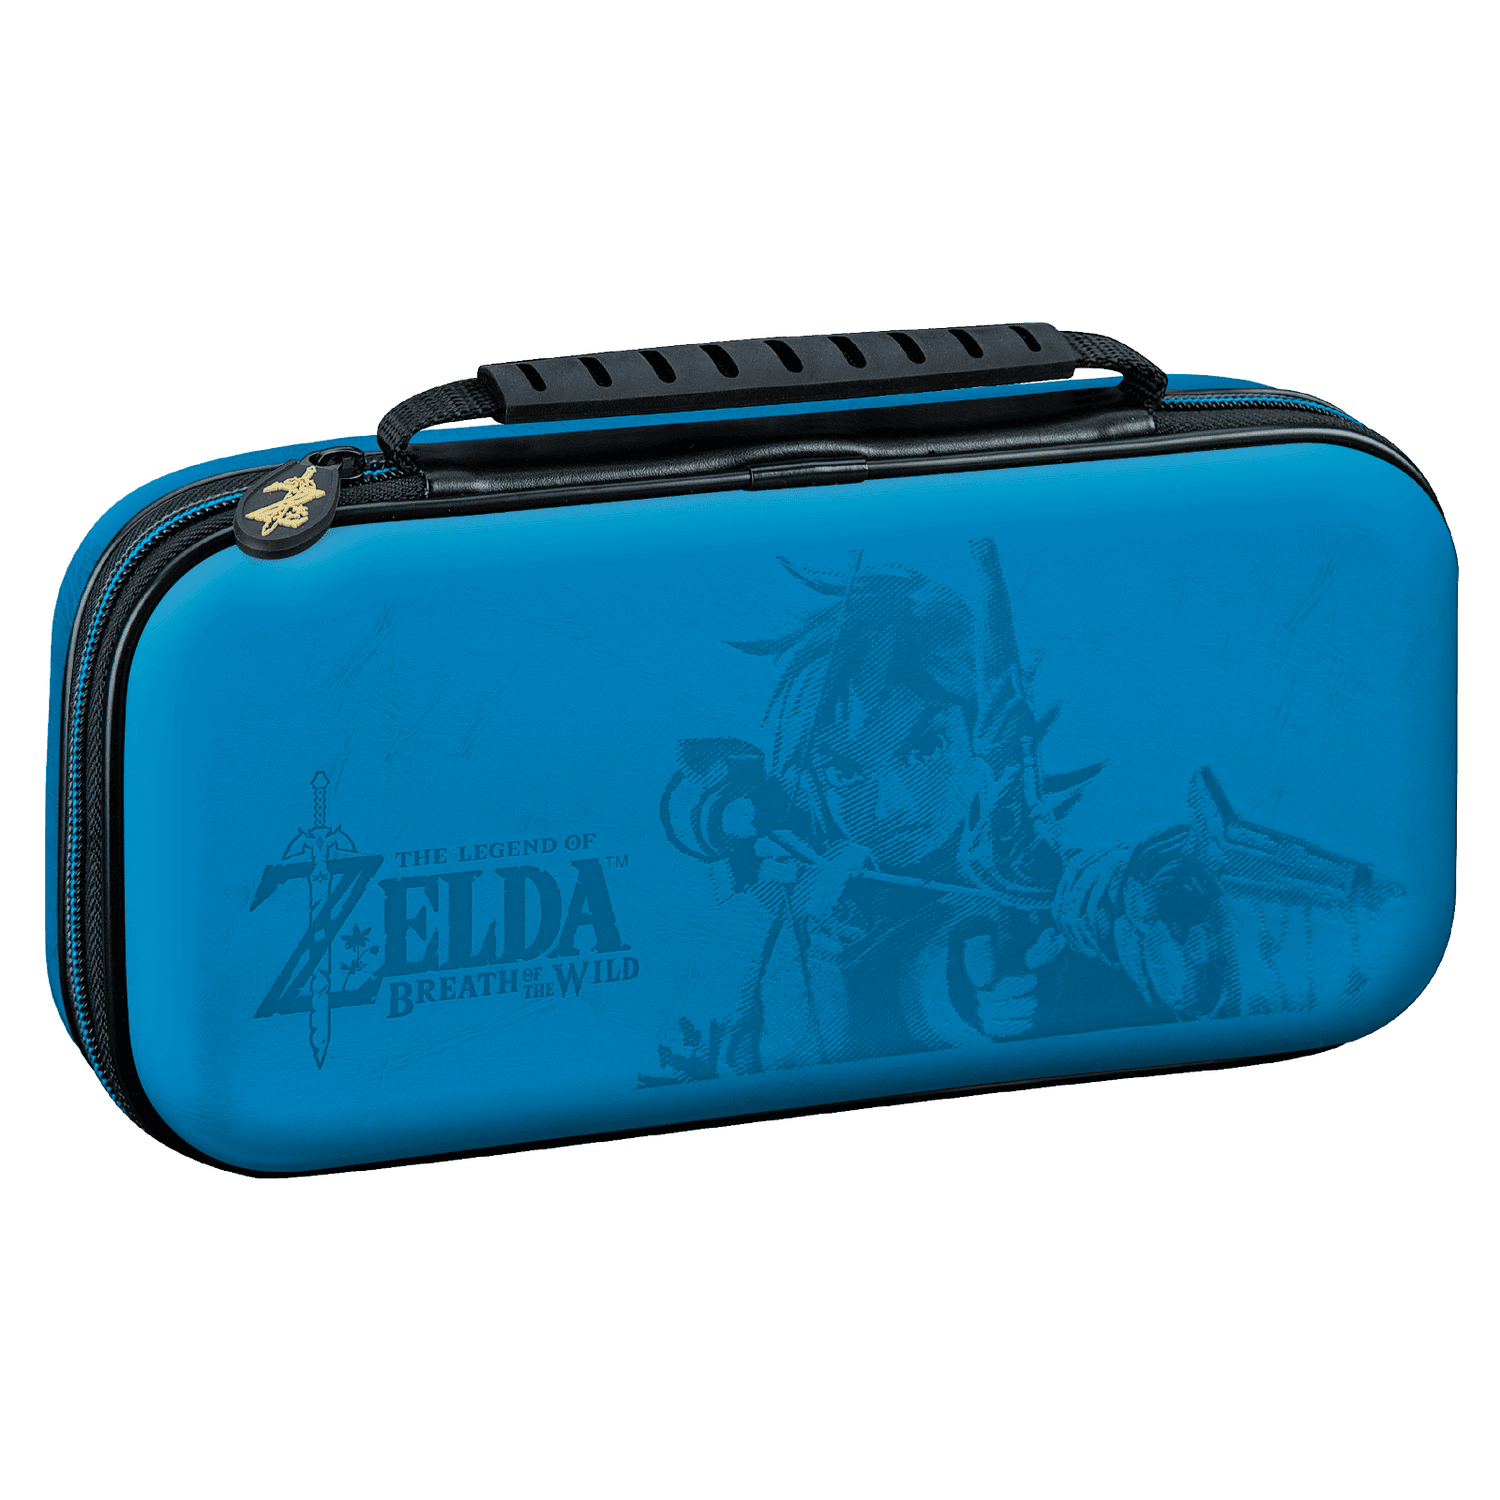 Nintendo Switch Zelda Travel Case - Blue Games Accessories - Zavvi (日本)